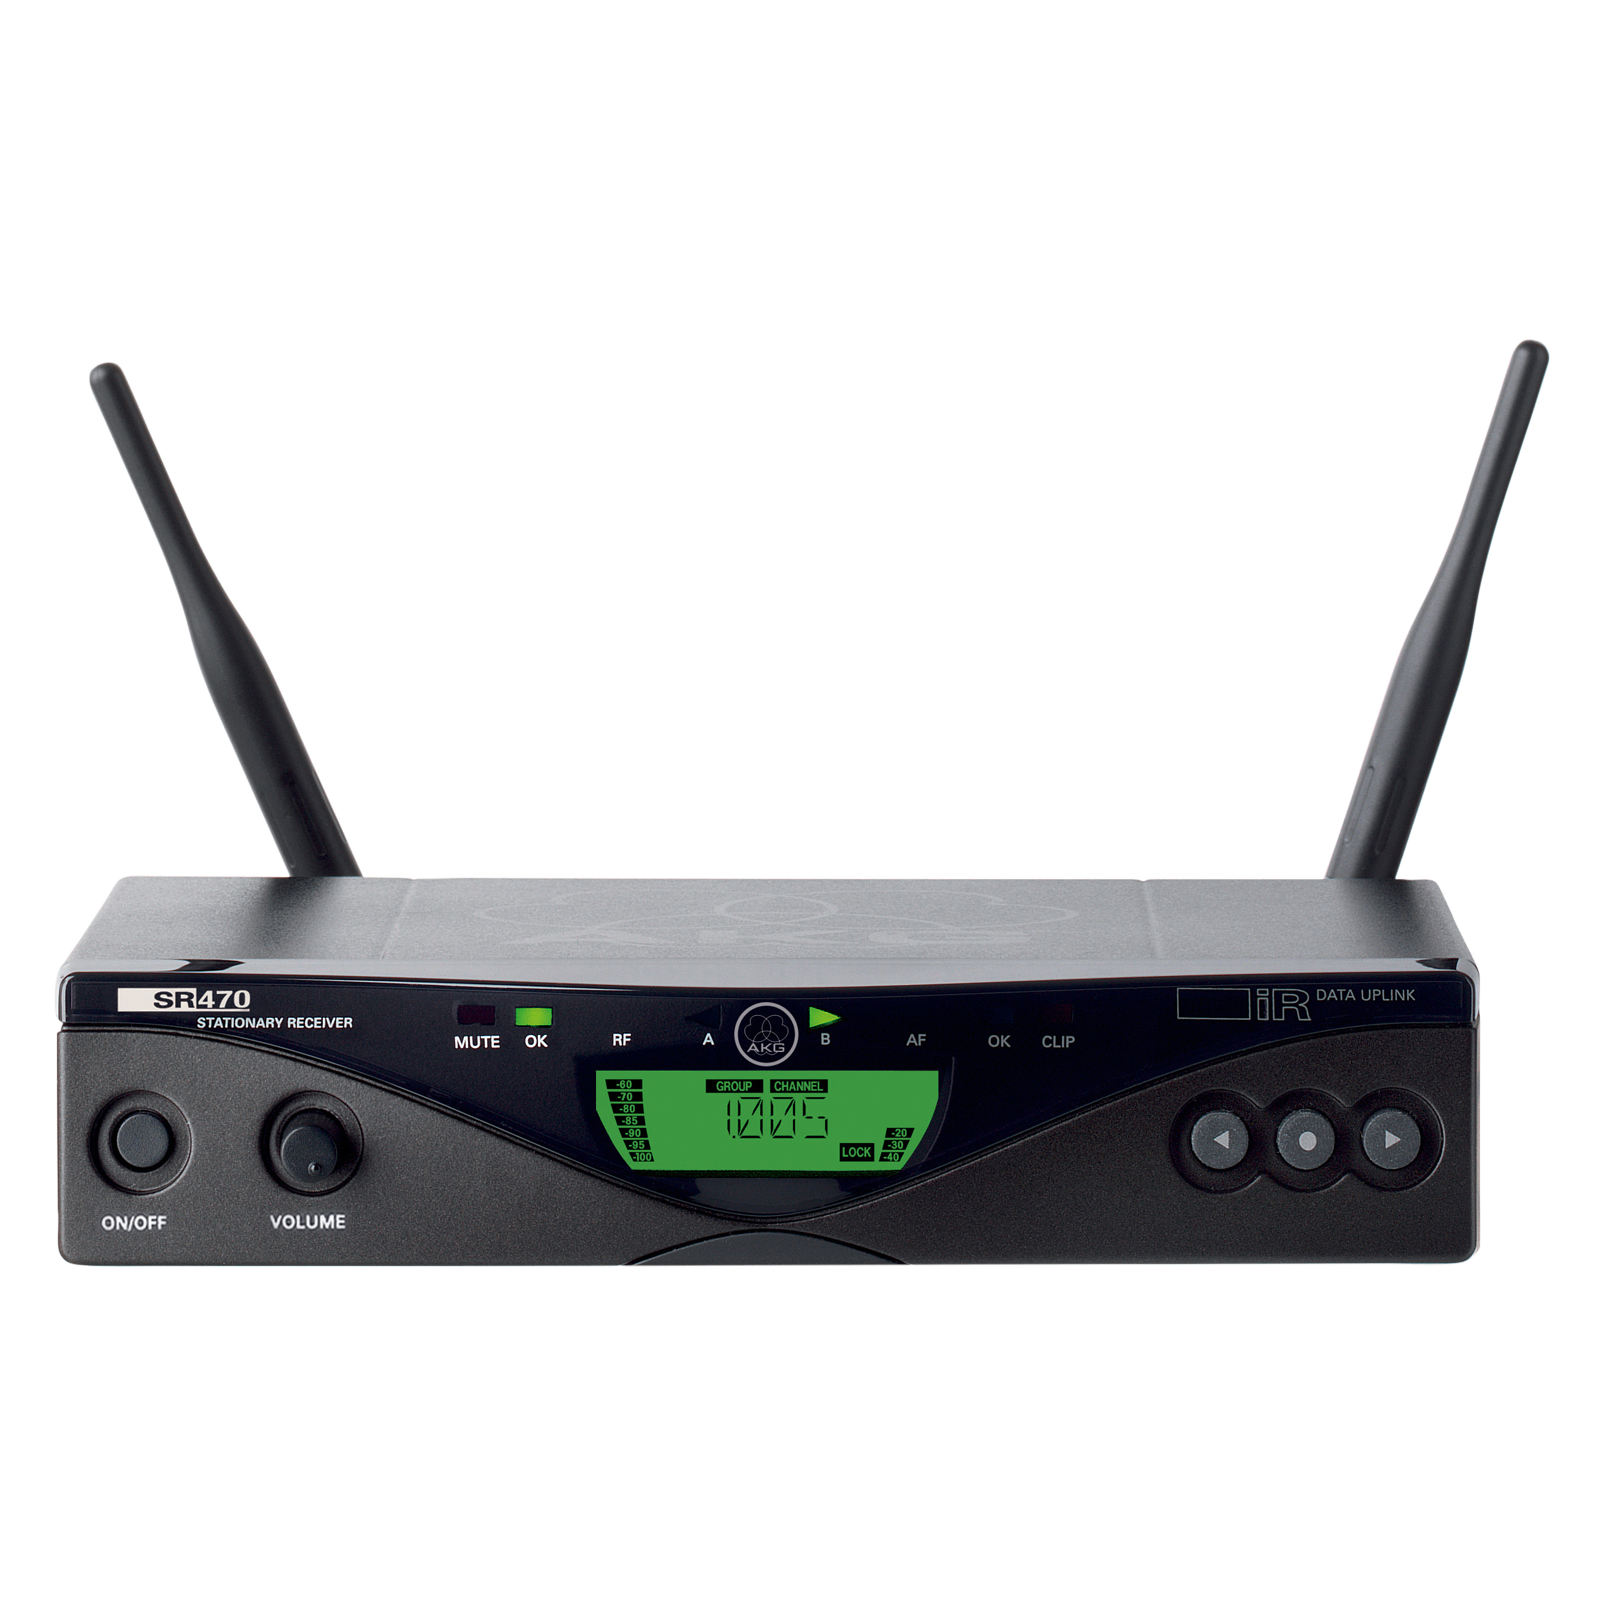 SR470 Band-8 (B-Stock) - Black - Professional wireless stationary receiver - Hero